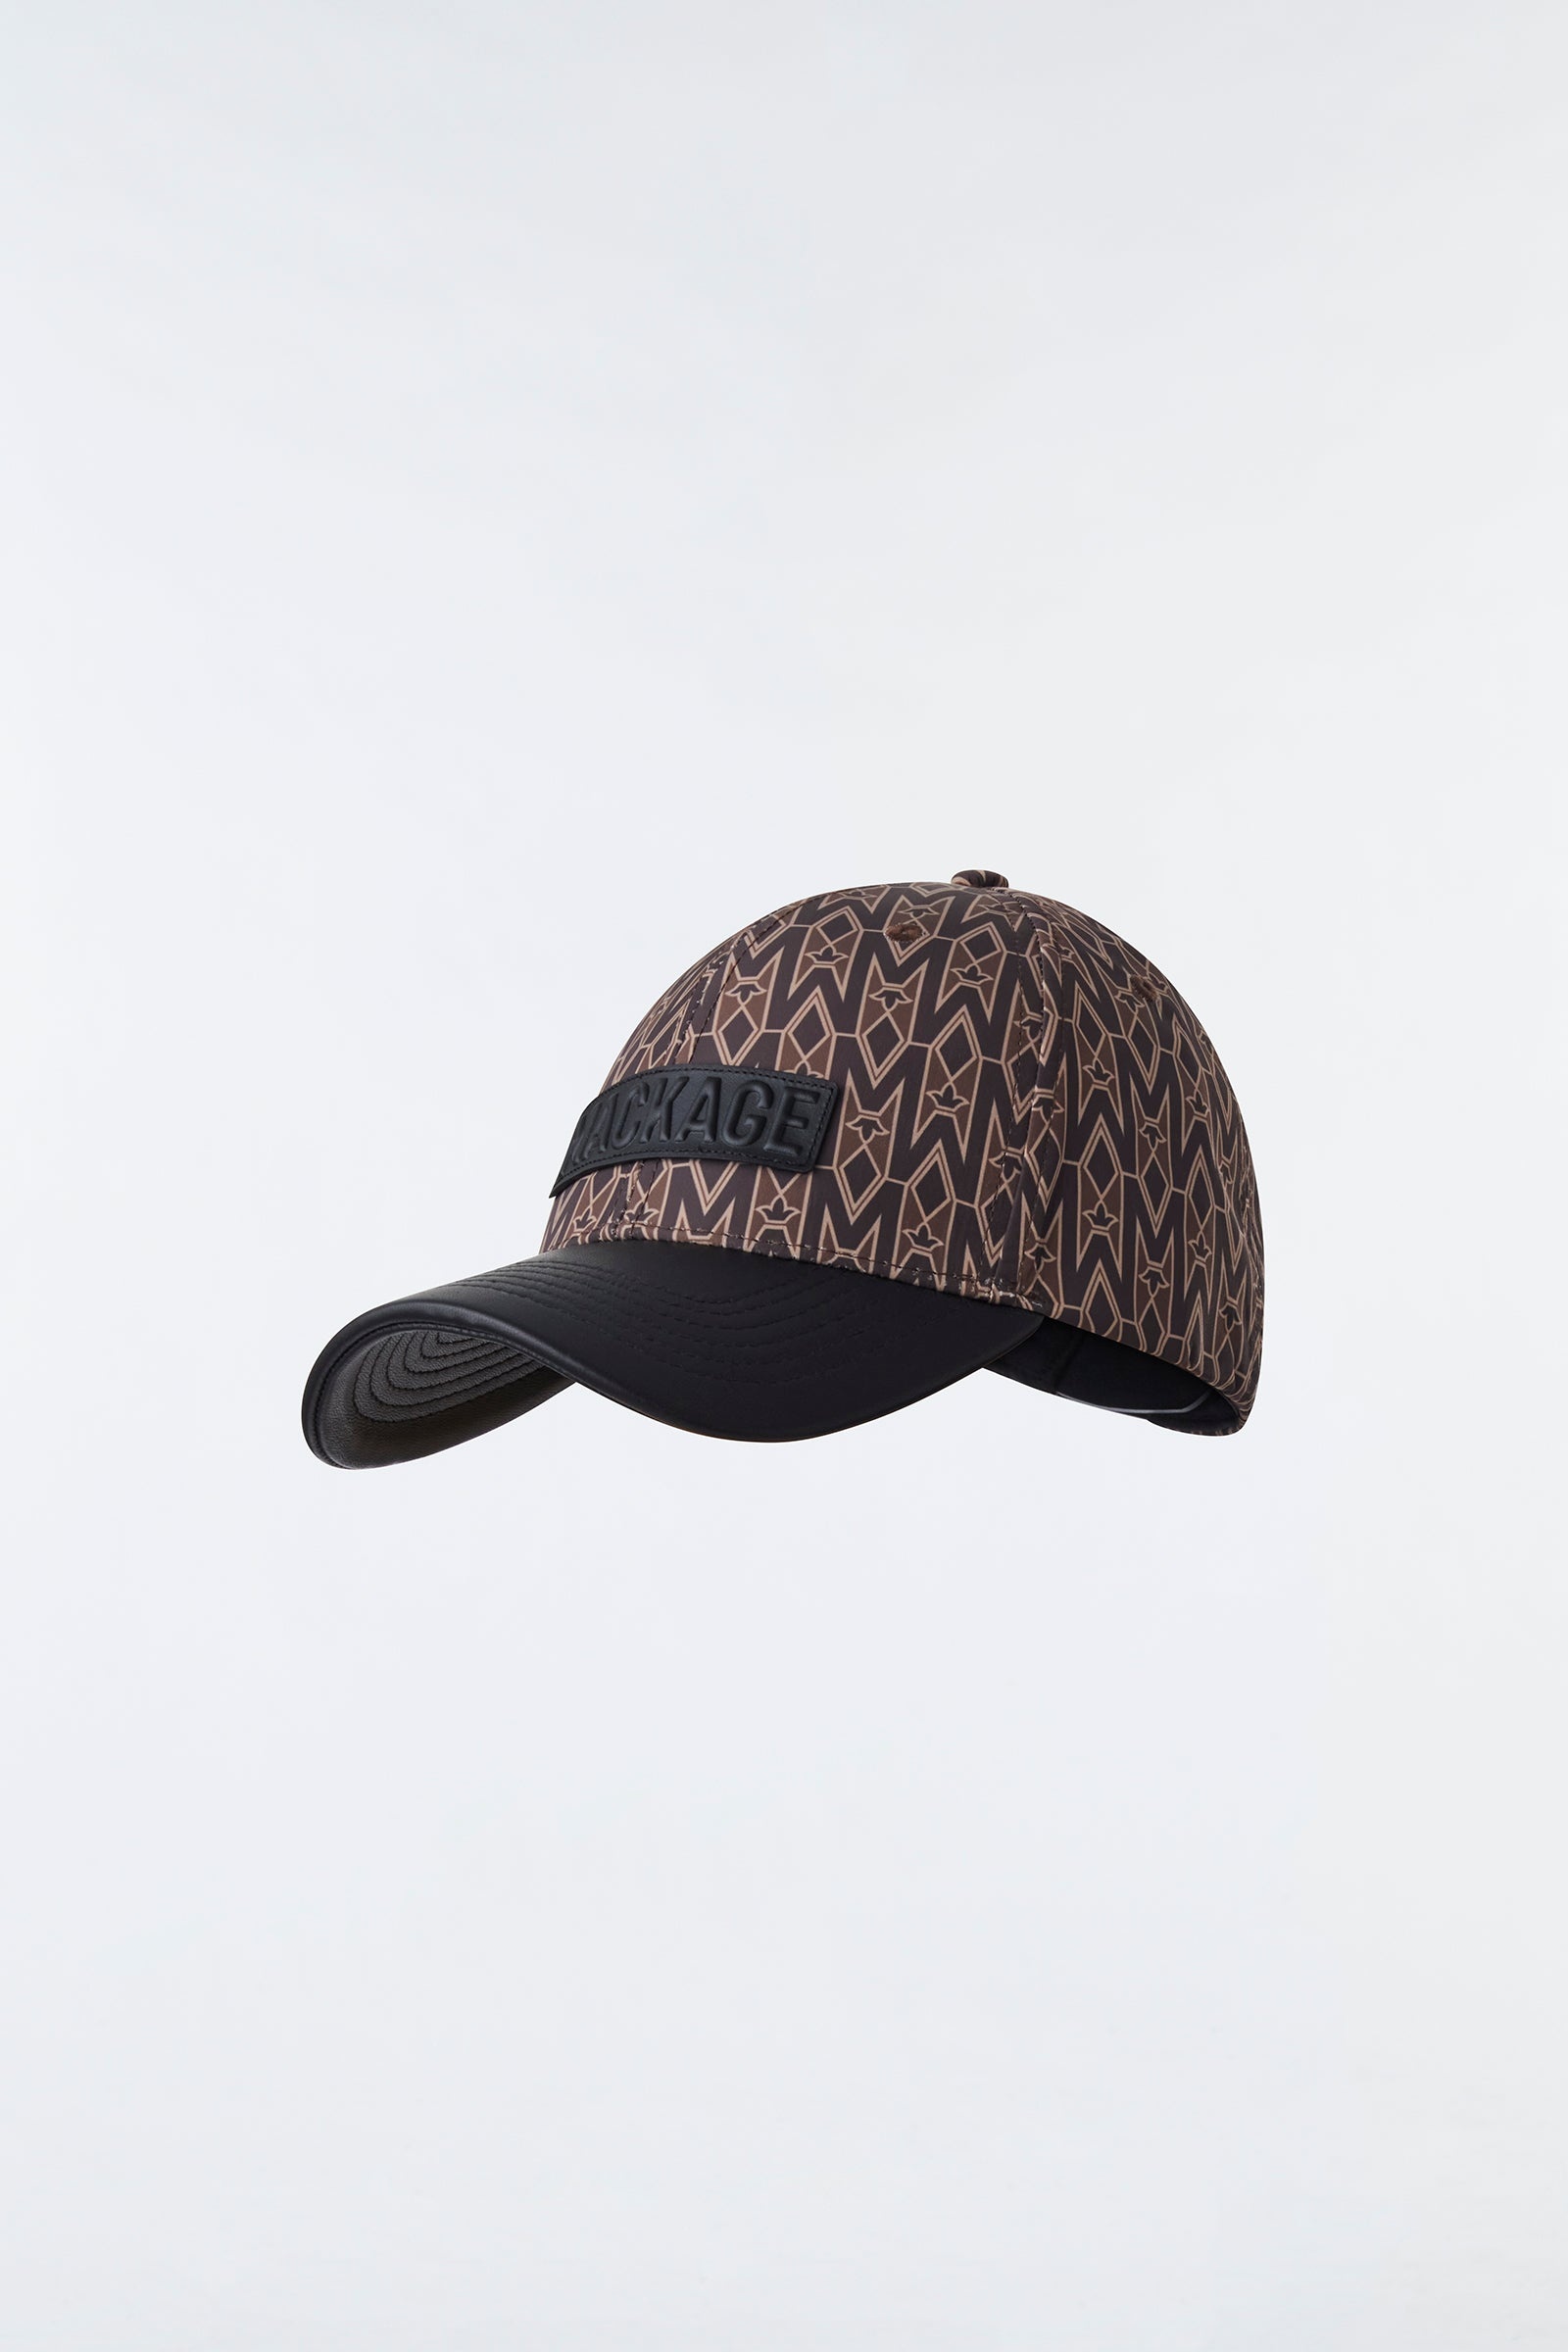 ANDERSON Baseball cap (R) Leather wordmark - 3